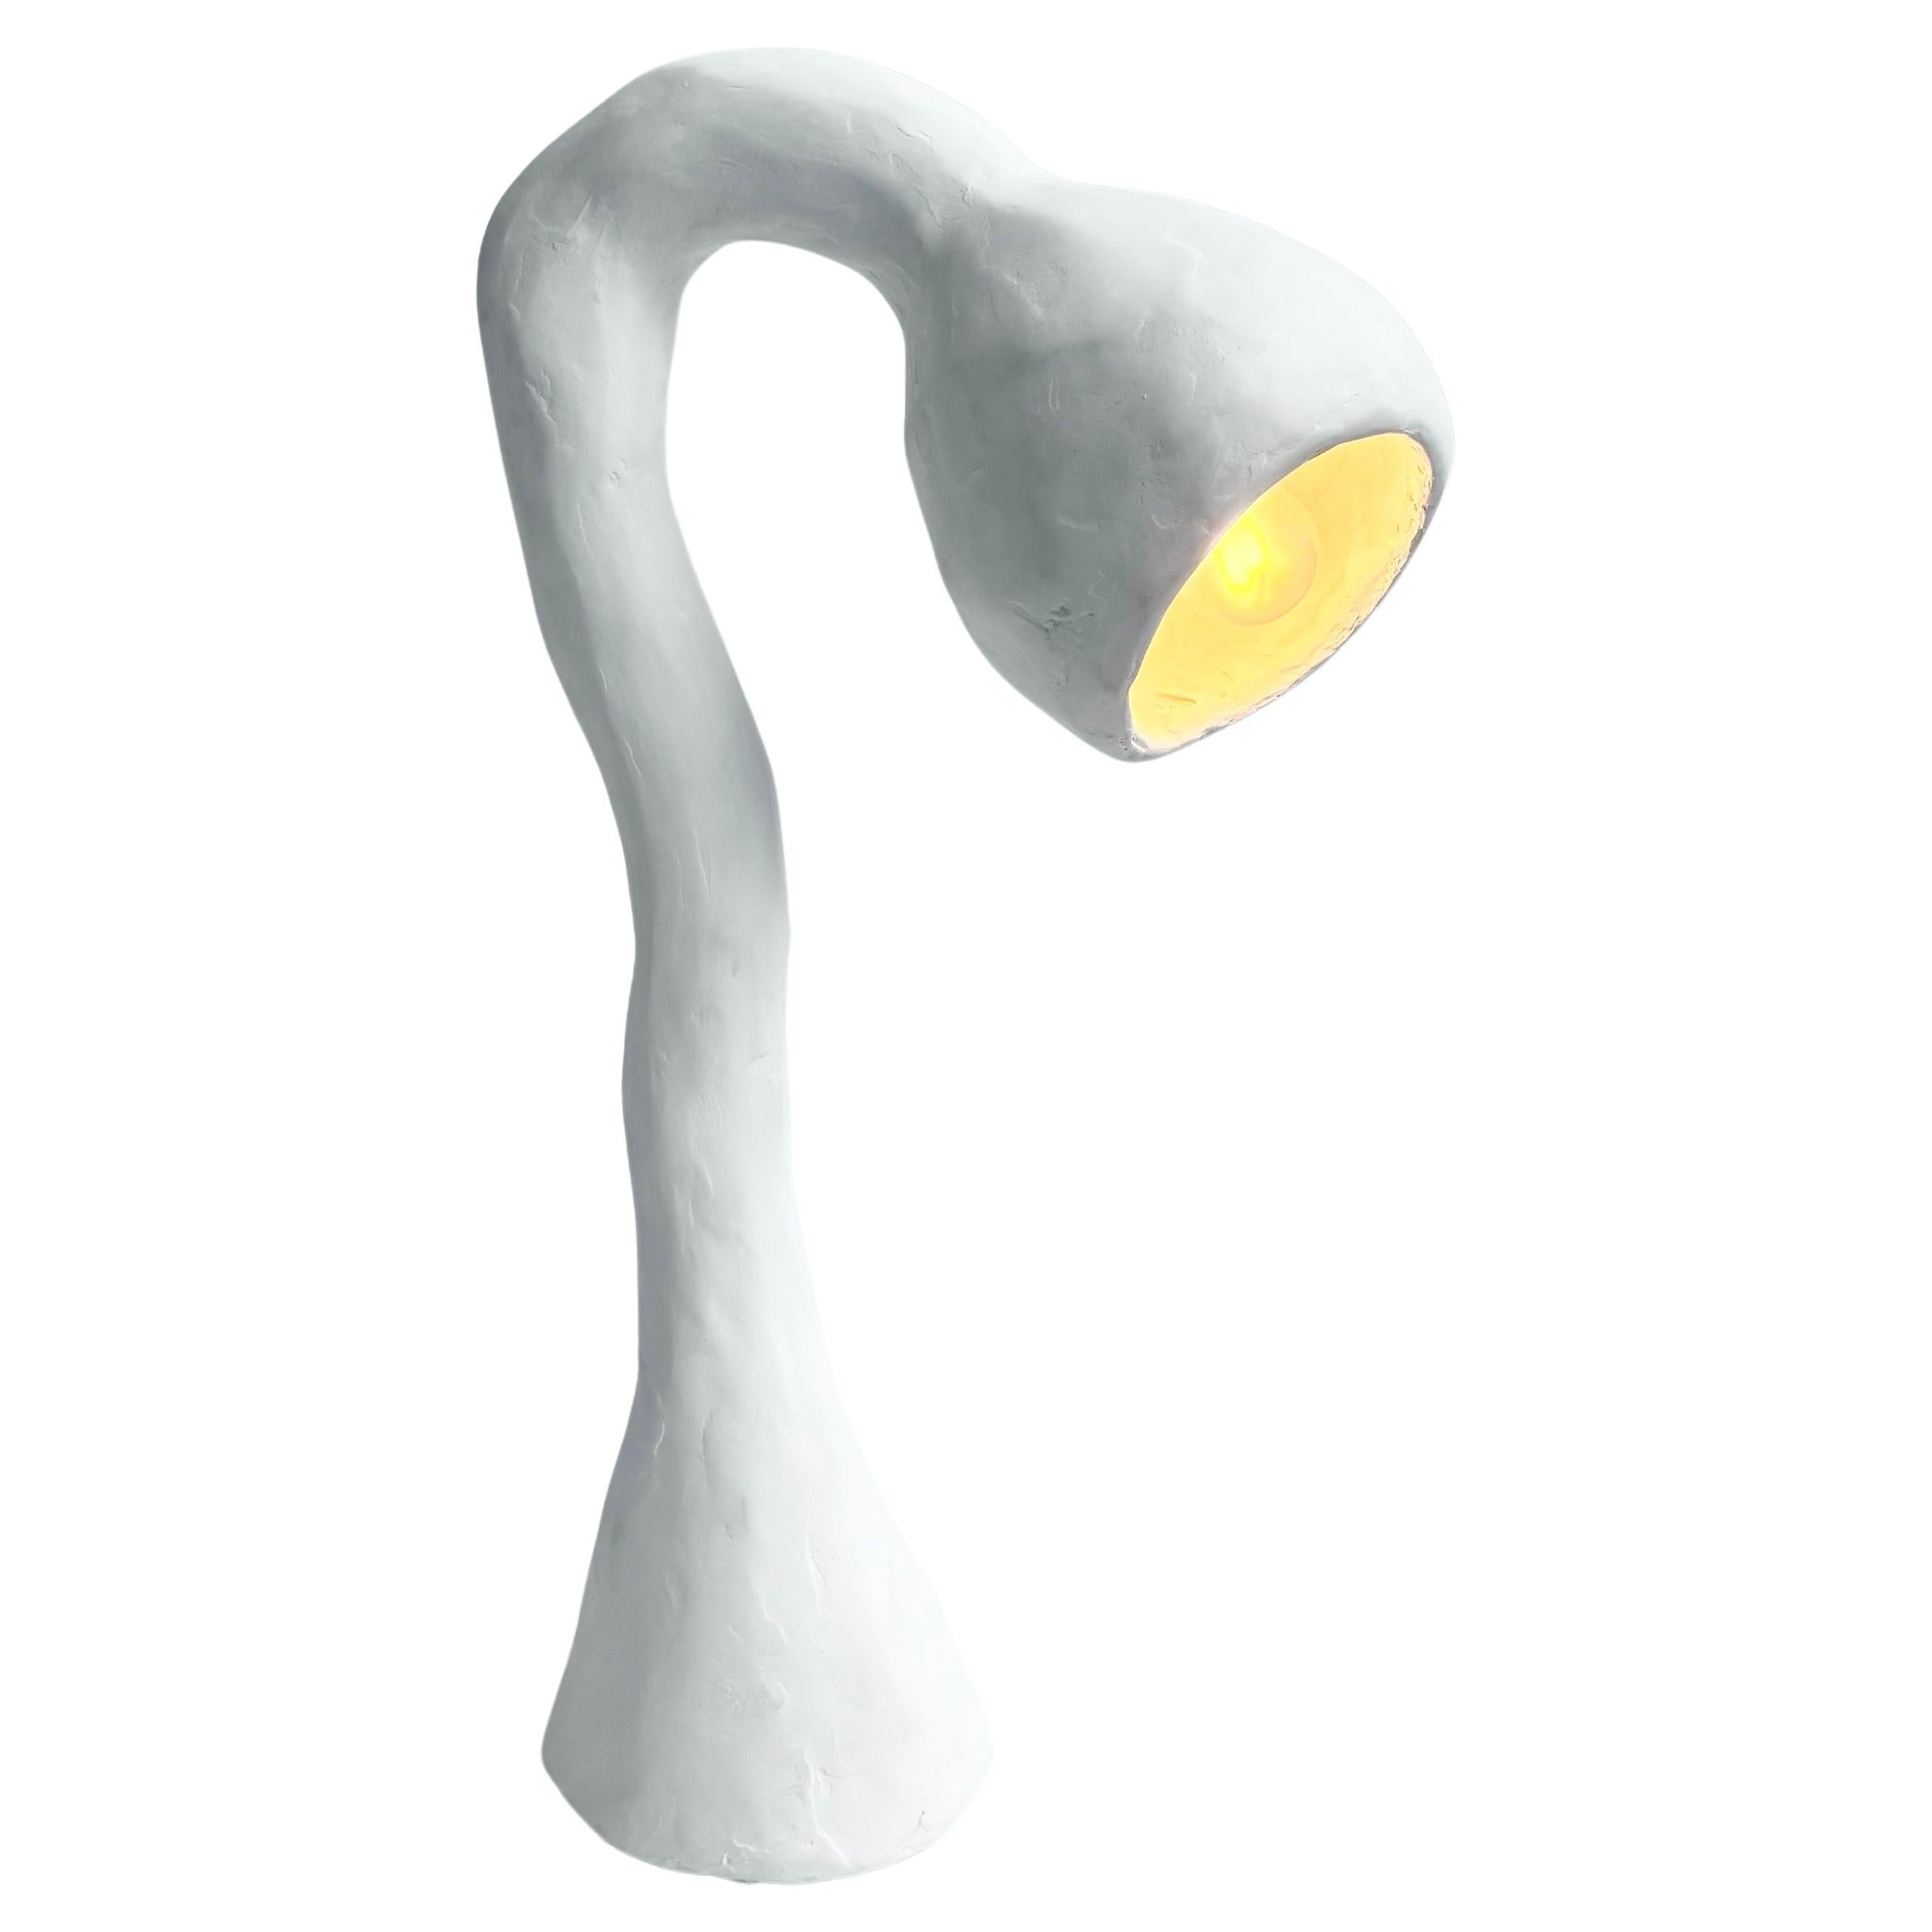 Lampe de bureau Biomorphic Line de Studio Chora, pierre calcaire blanche, en stock